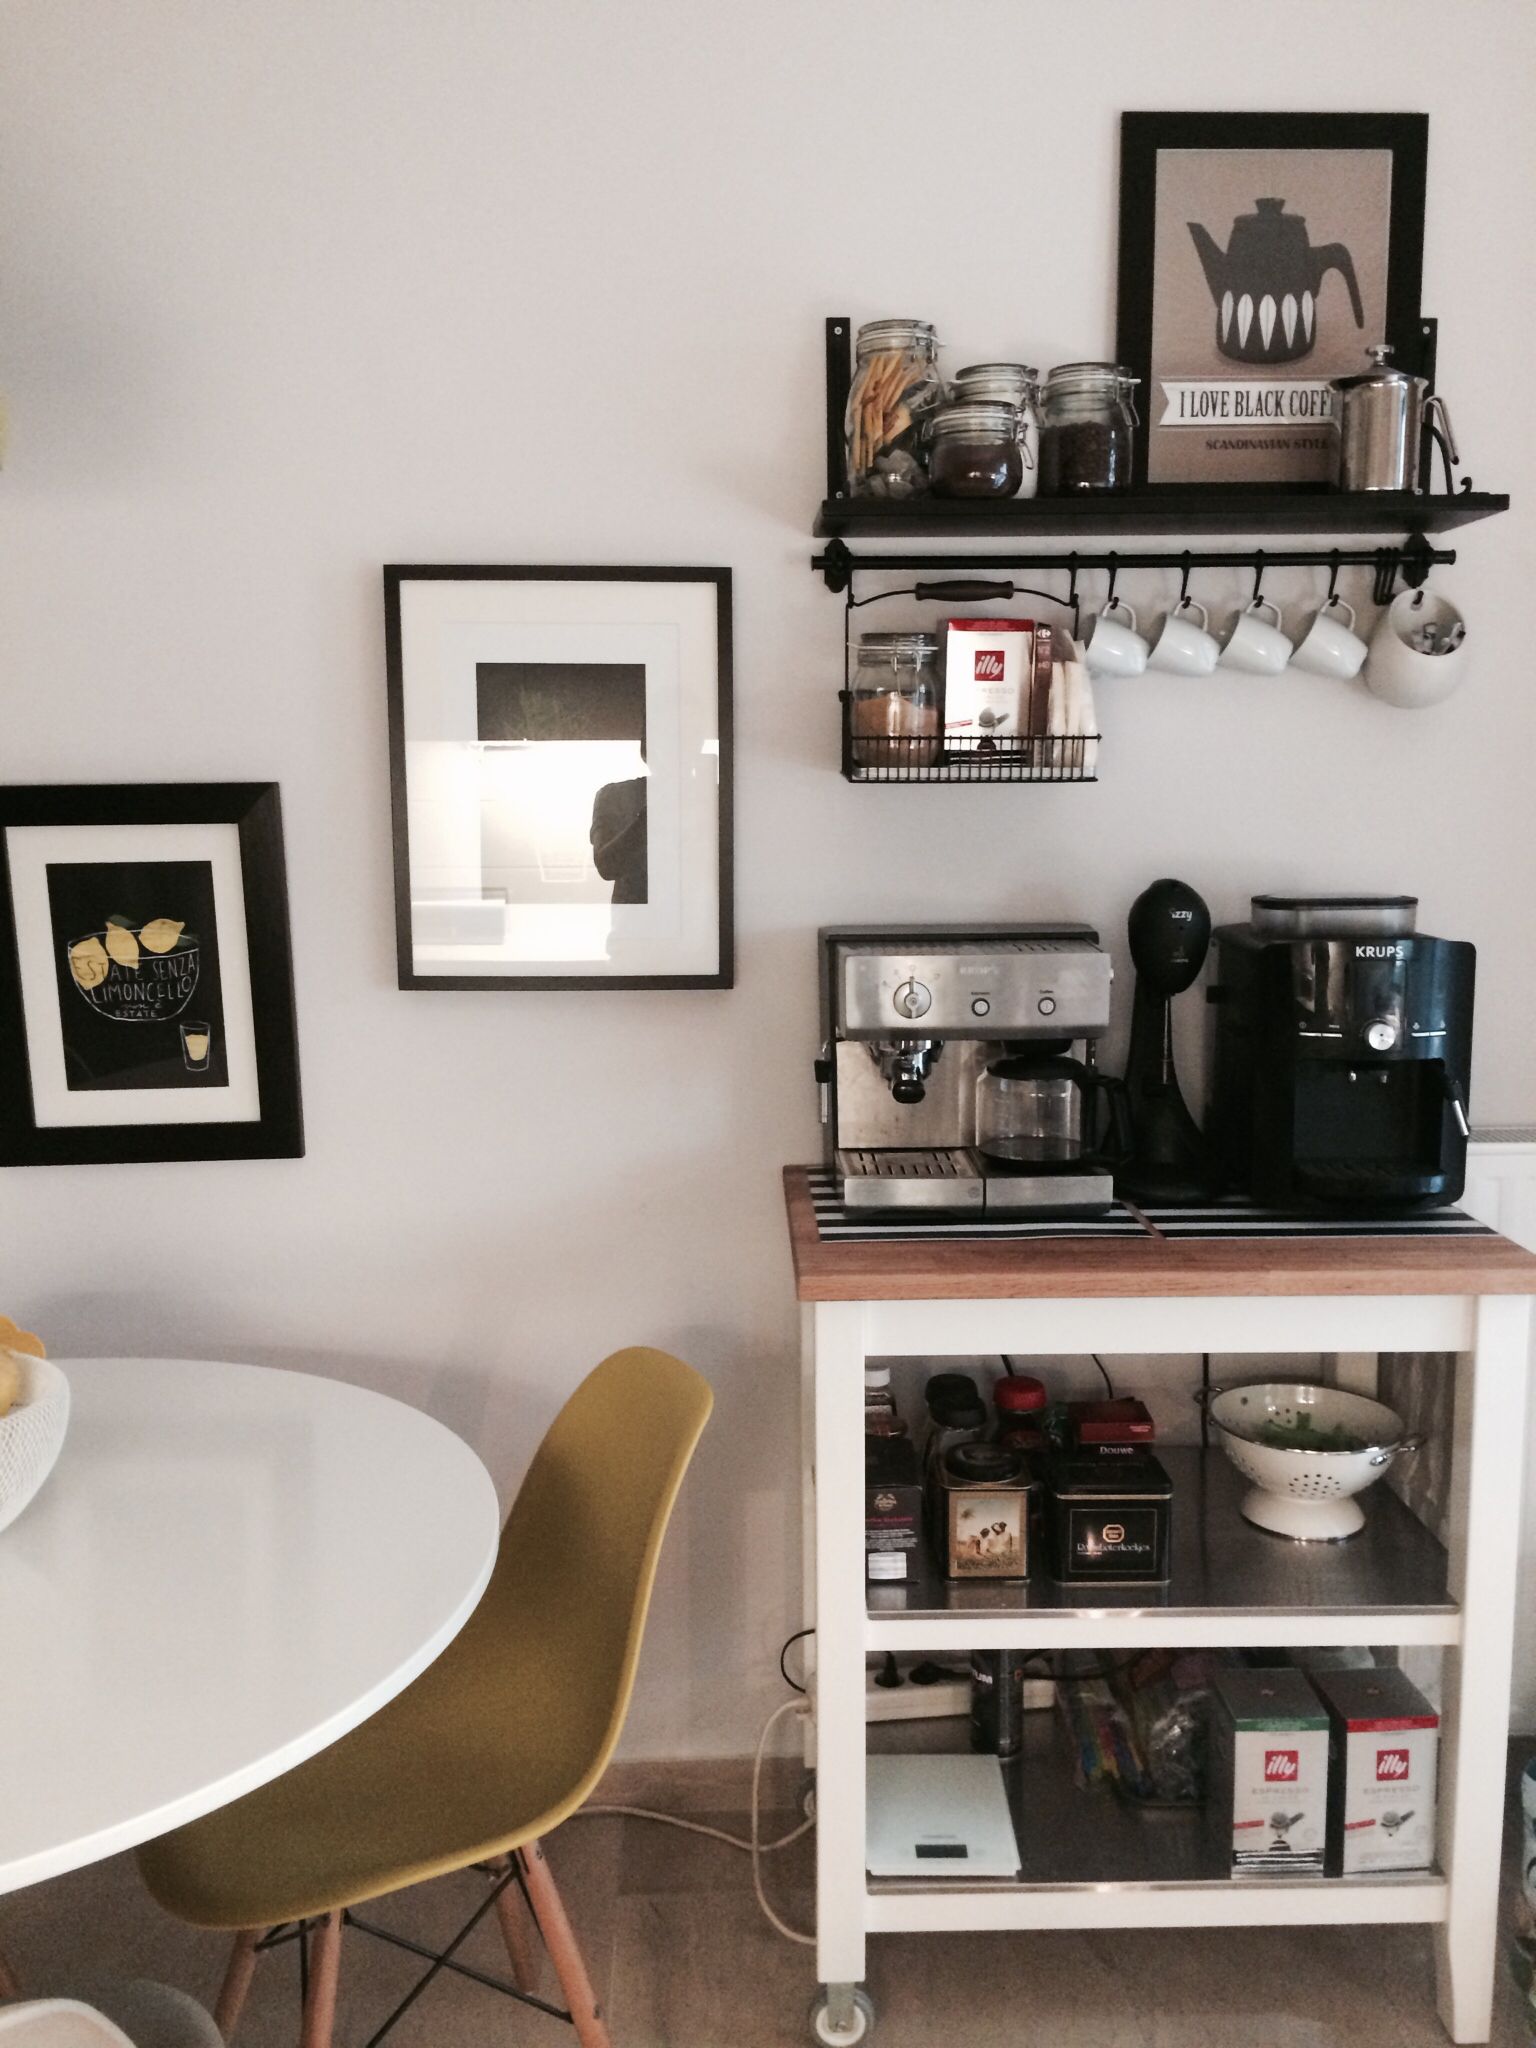 Useful spaces: an IKEA coffee bar